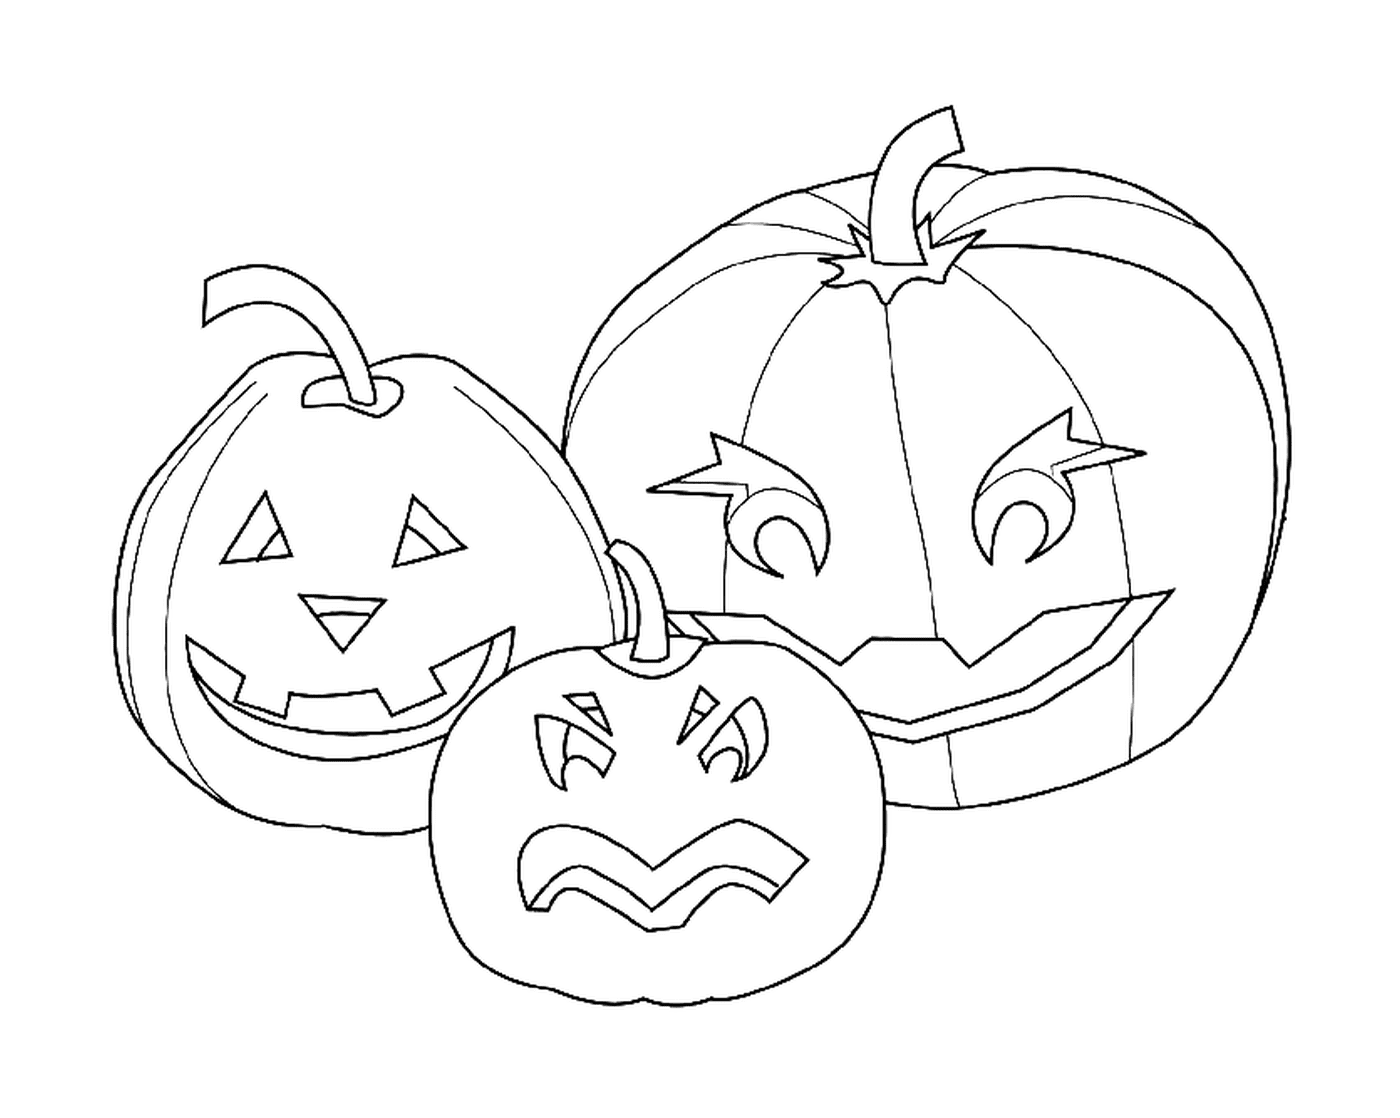  Three pumpkins for Halloween 